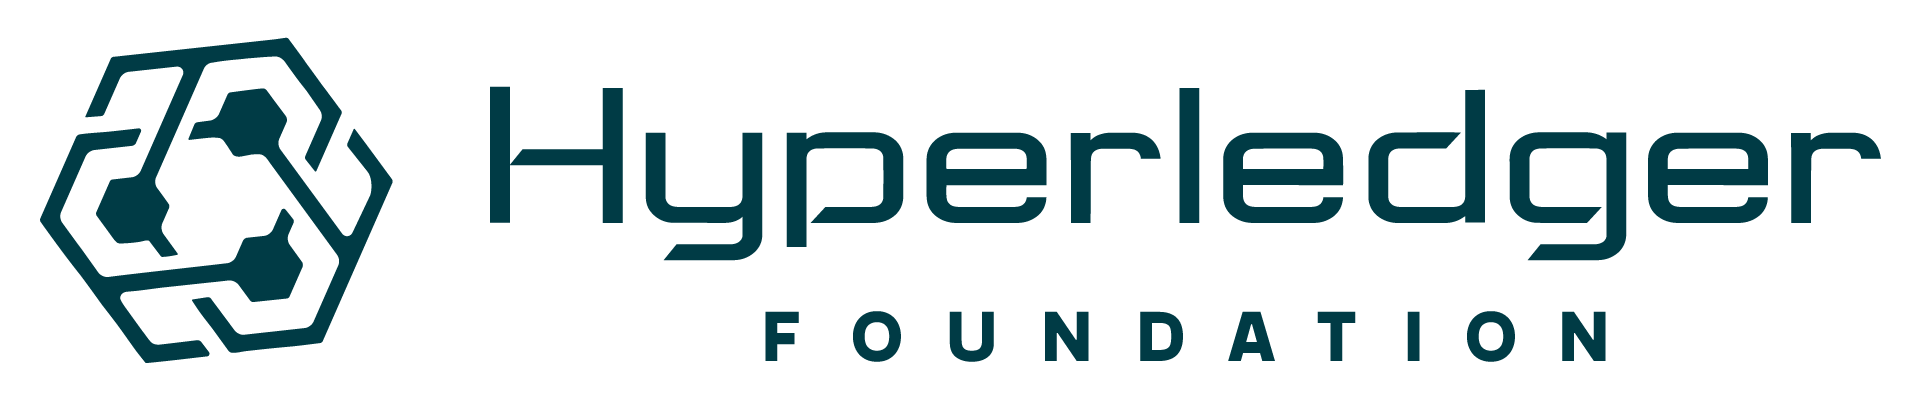 Hyperledger Foundation